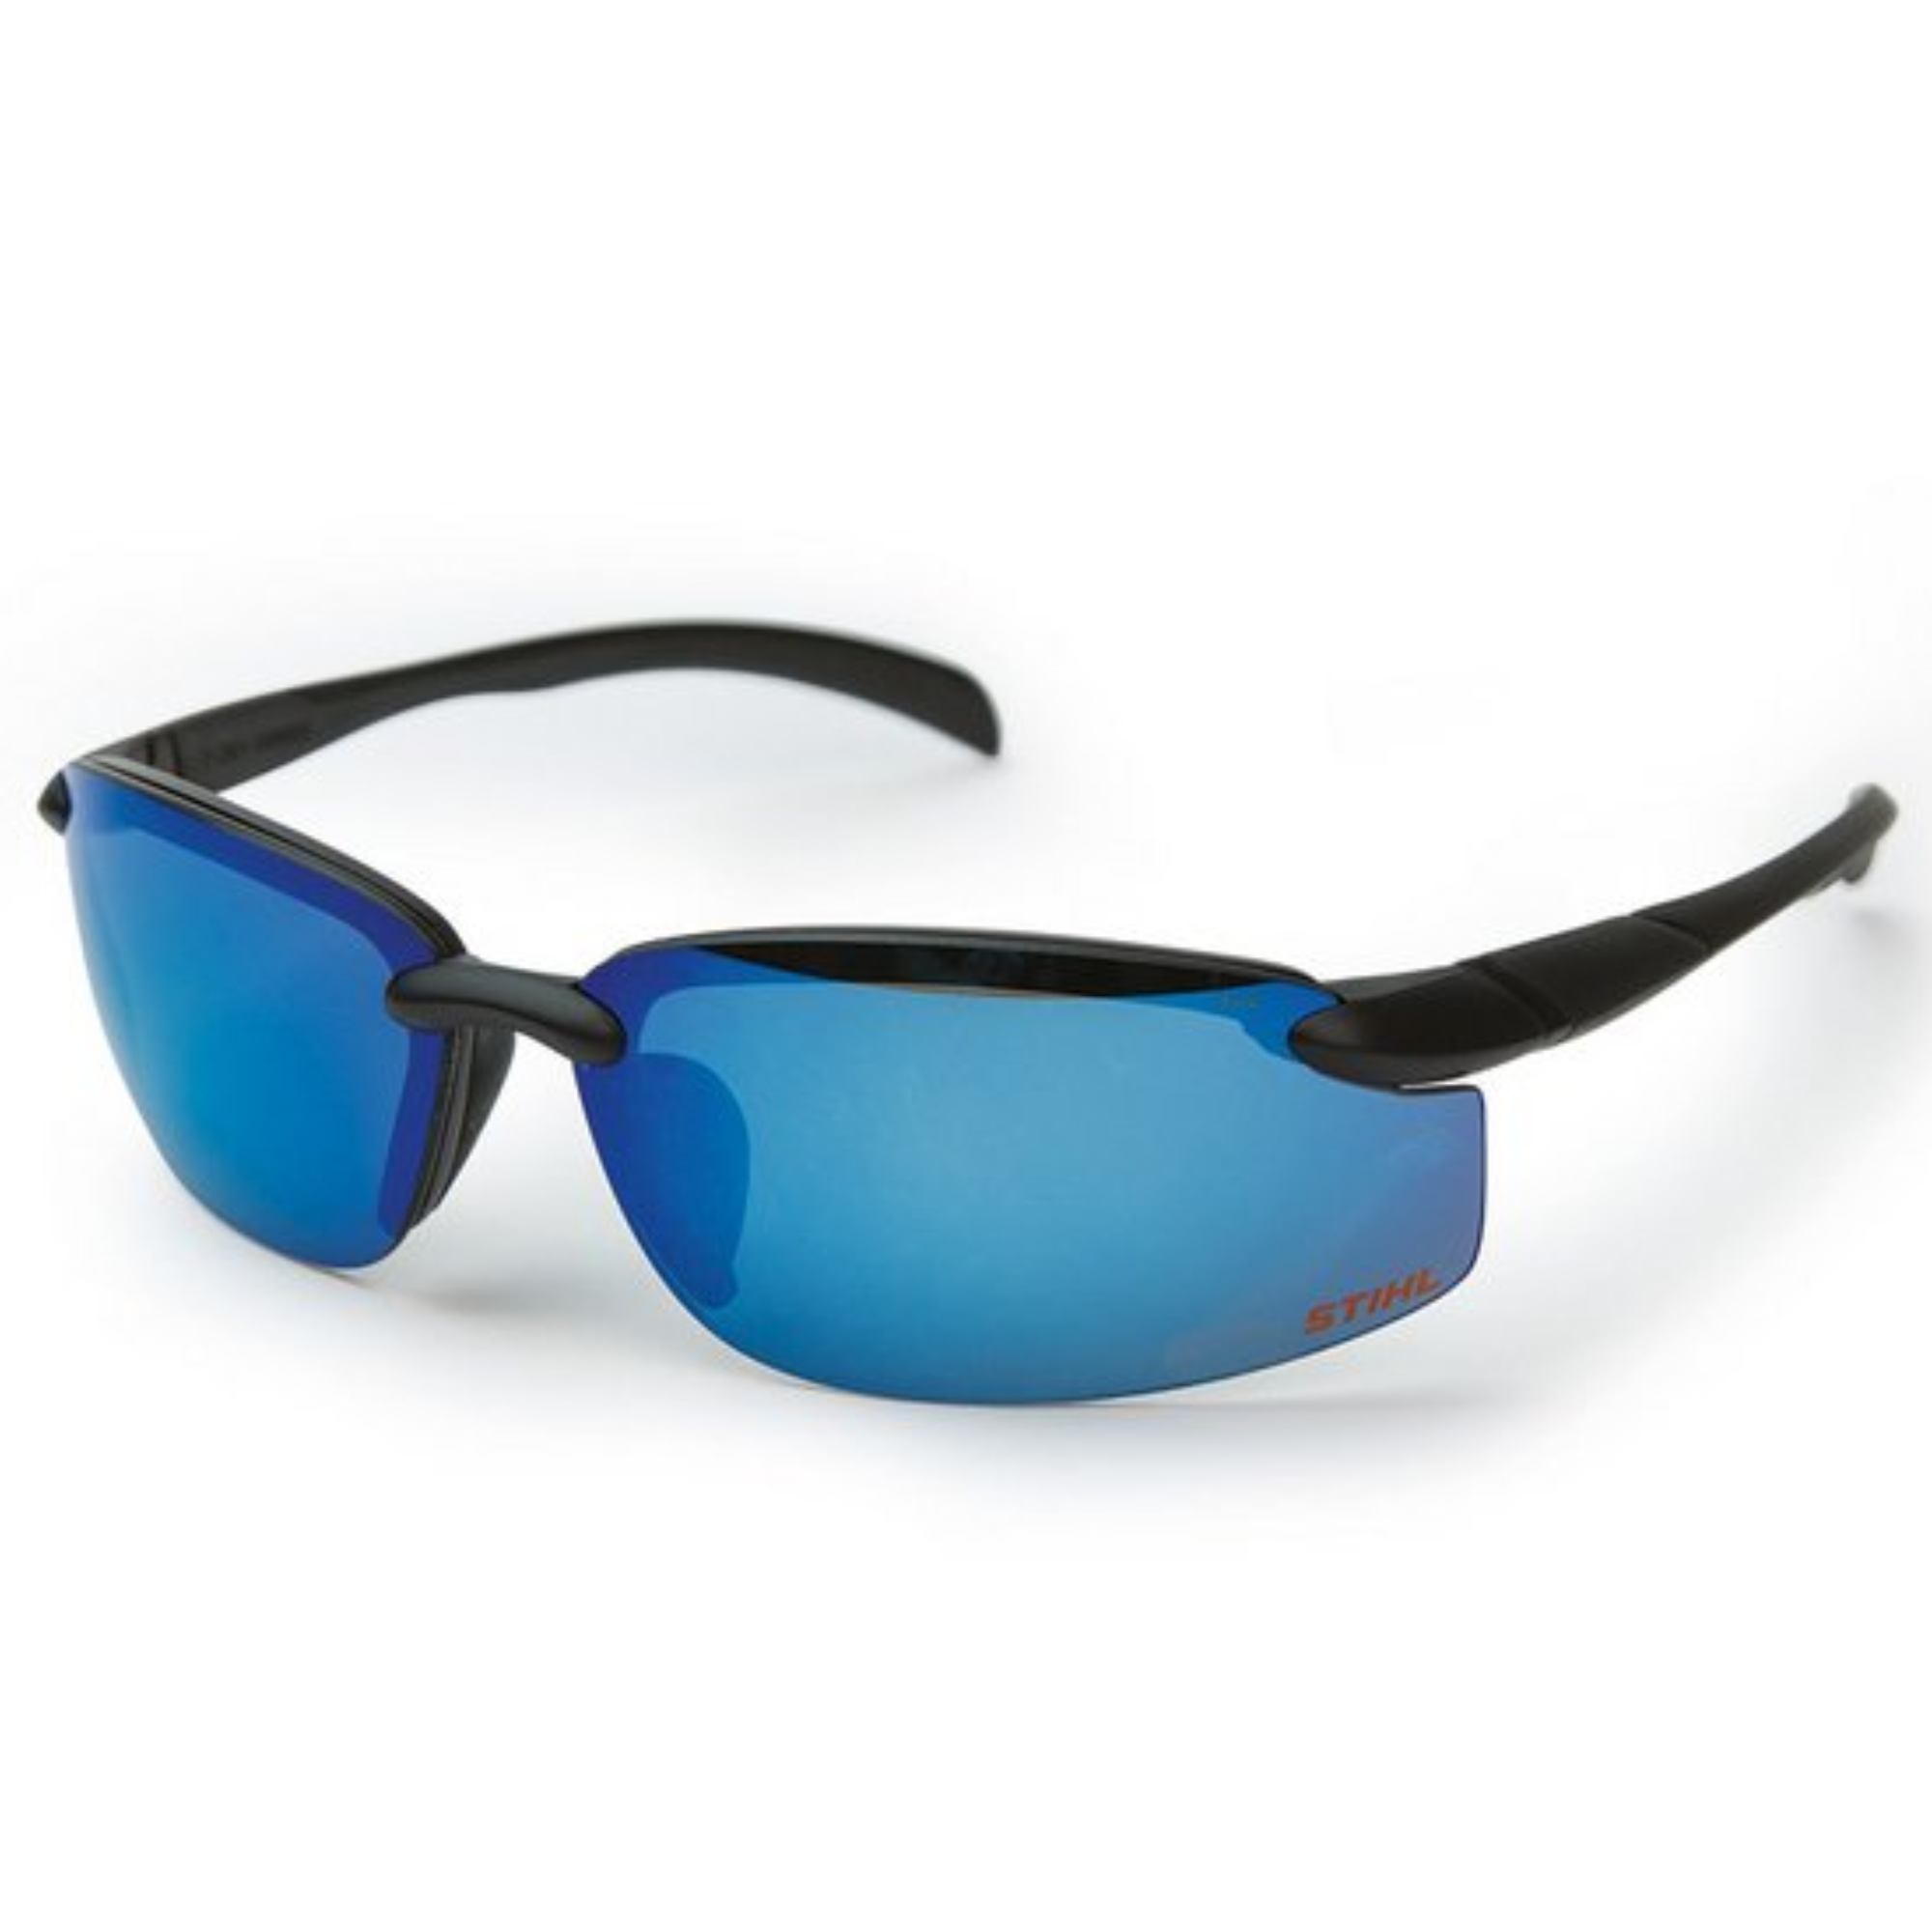 Stihl Deputy II Safety Glasses | Ice Blue Lens | 7010 884 0395